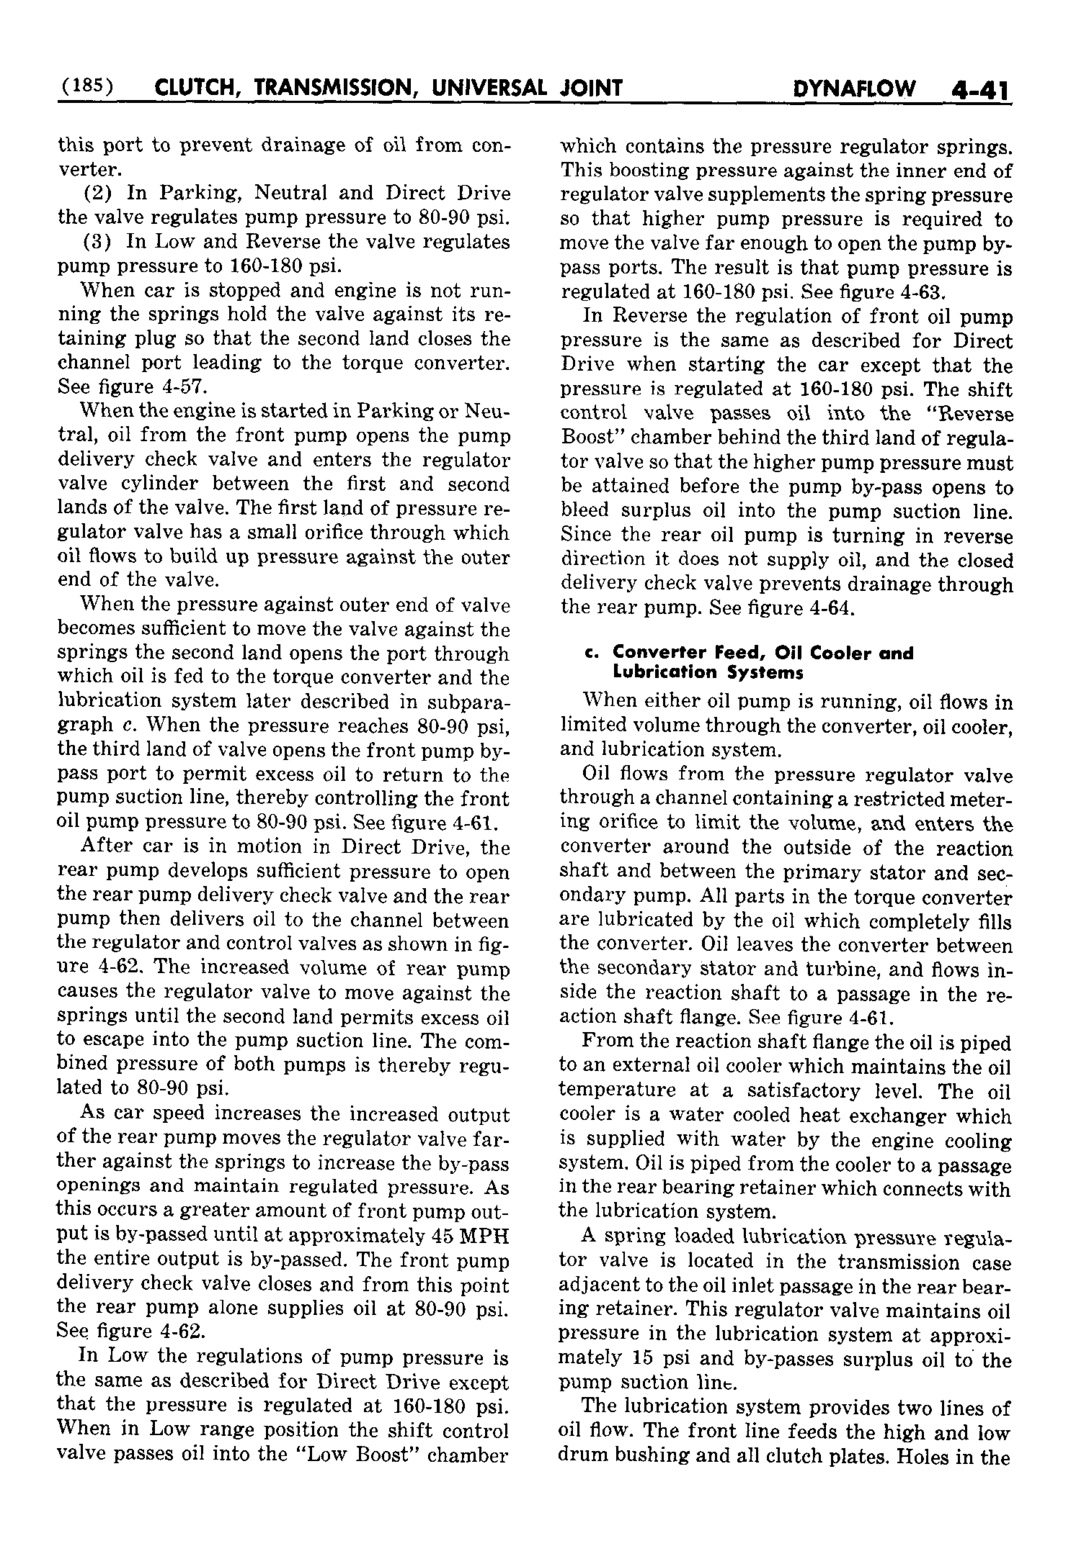 n_05 1952 Buick Shop Manual - Transmission-041-041.jpg